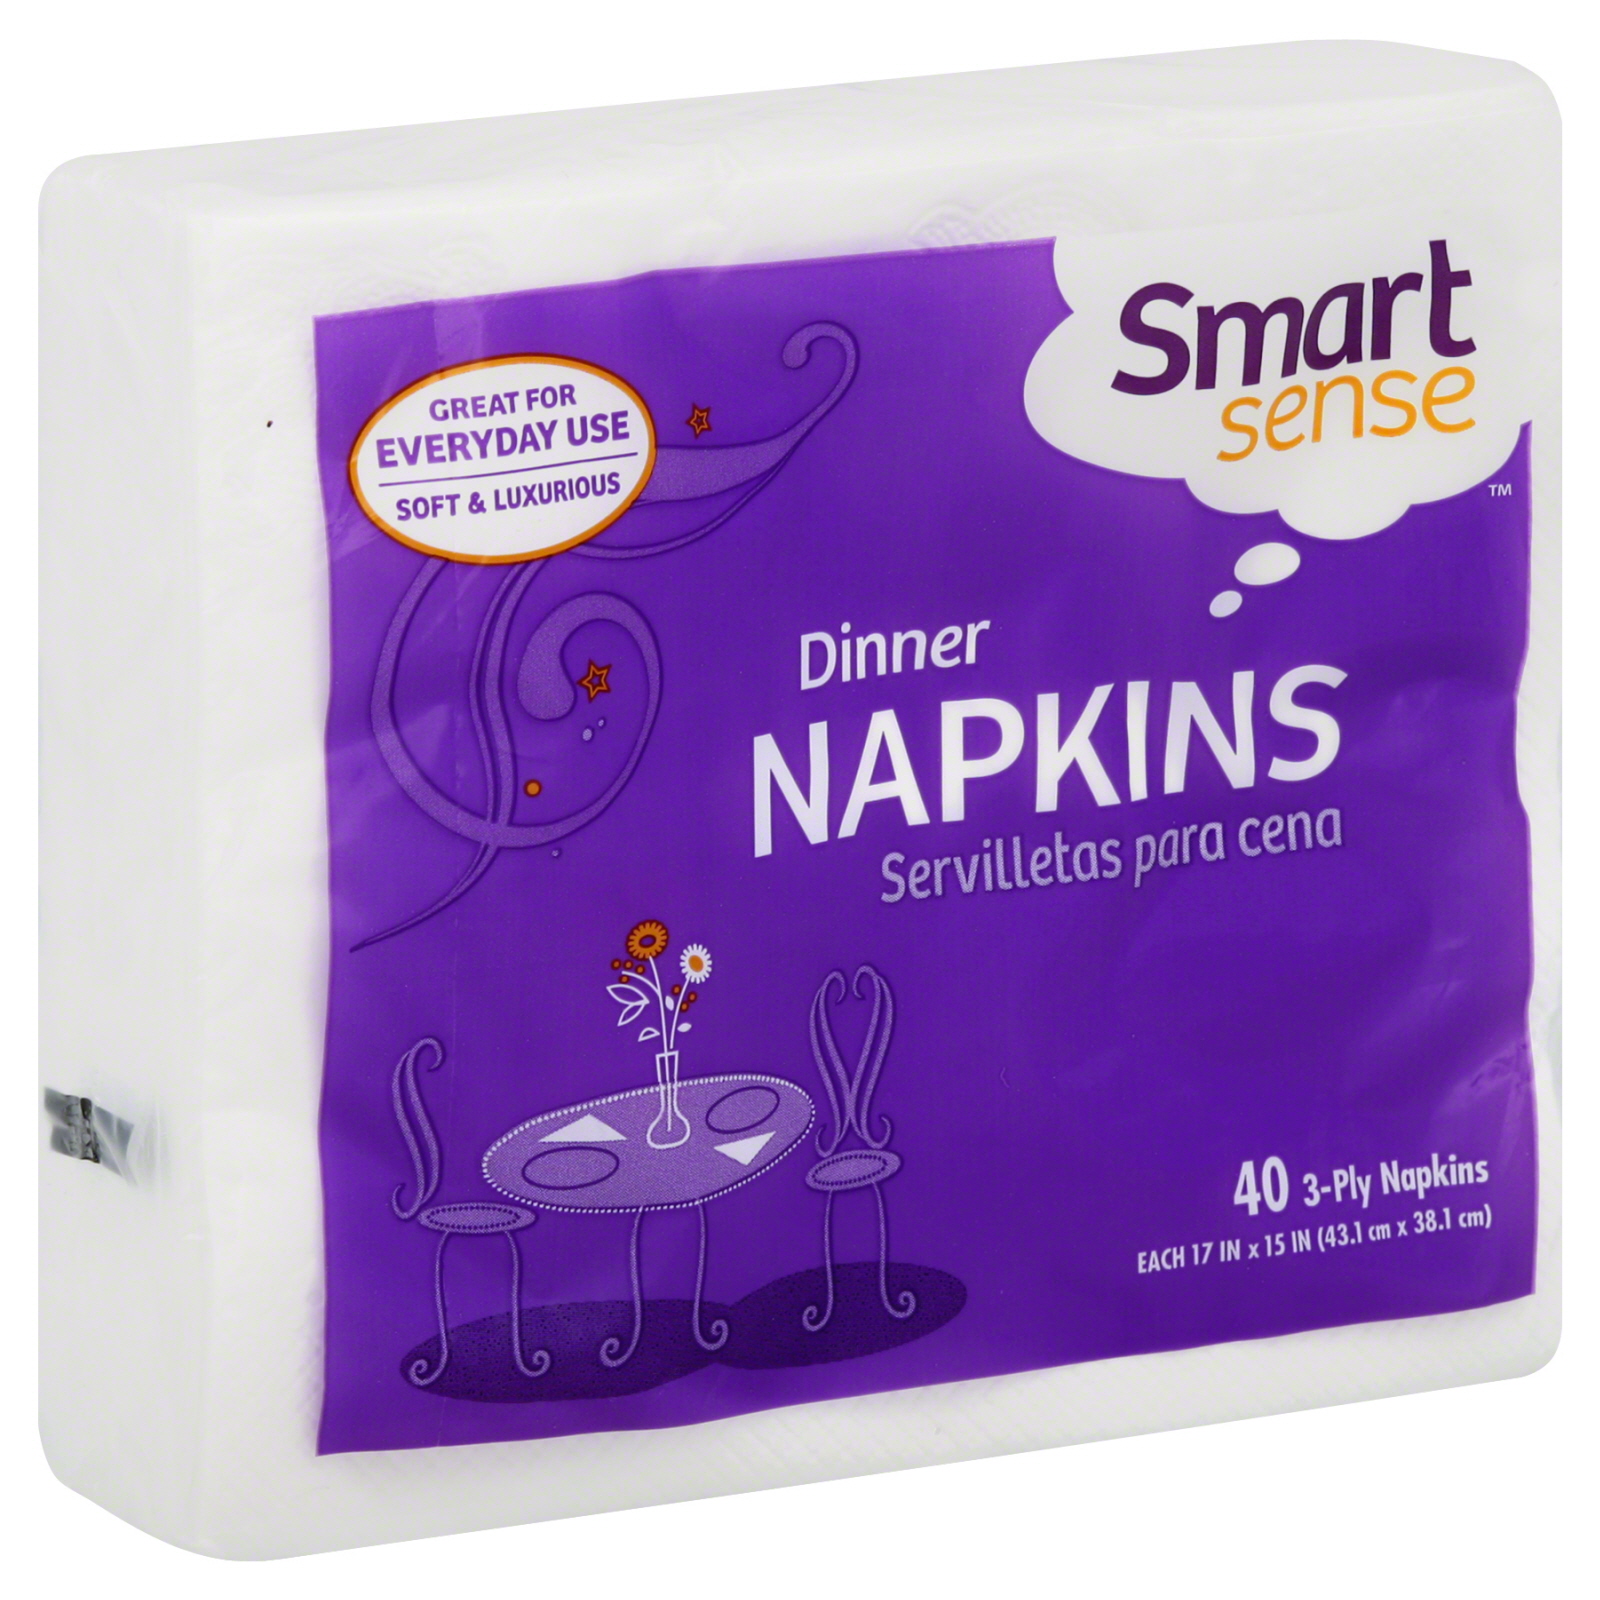 Smart Sense Dinner Napkins 3-ply, 40ct